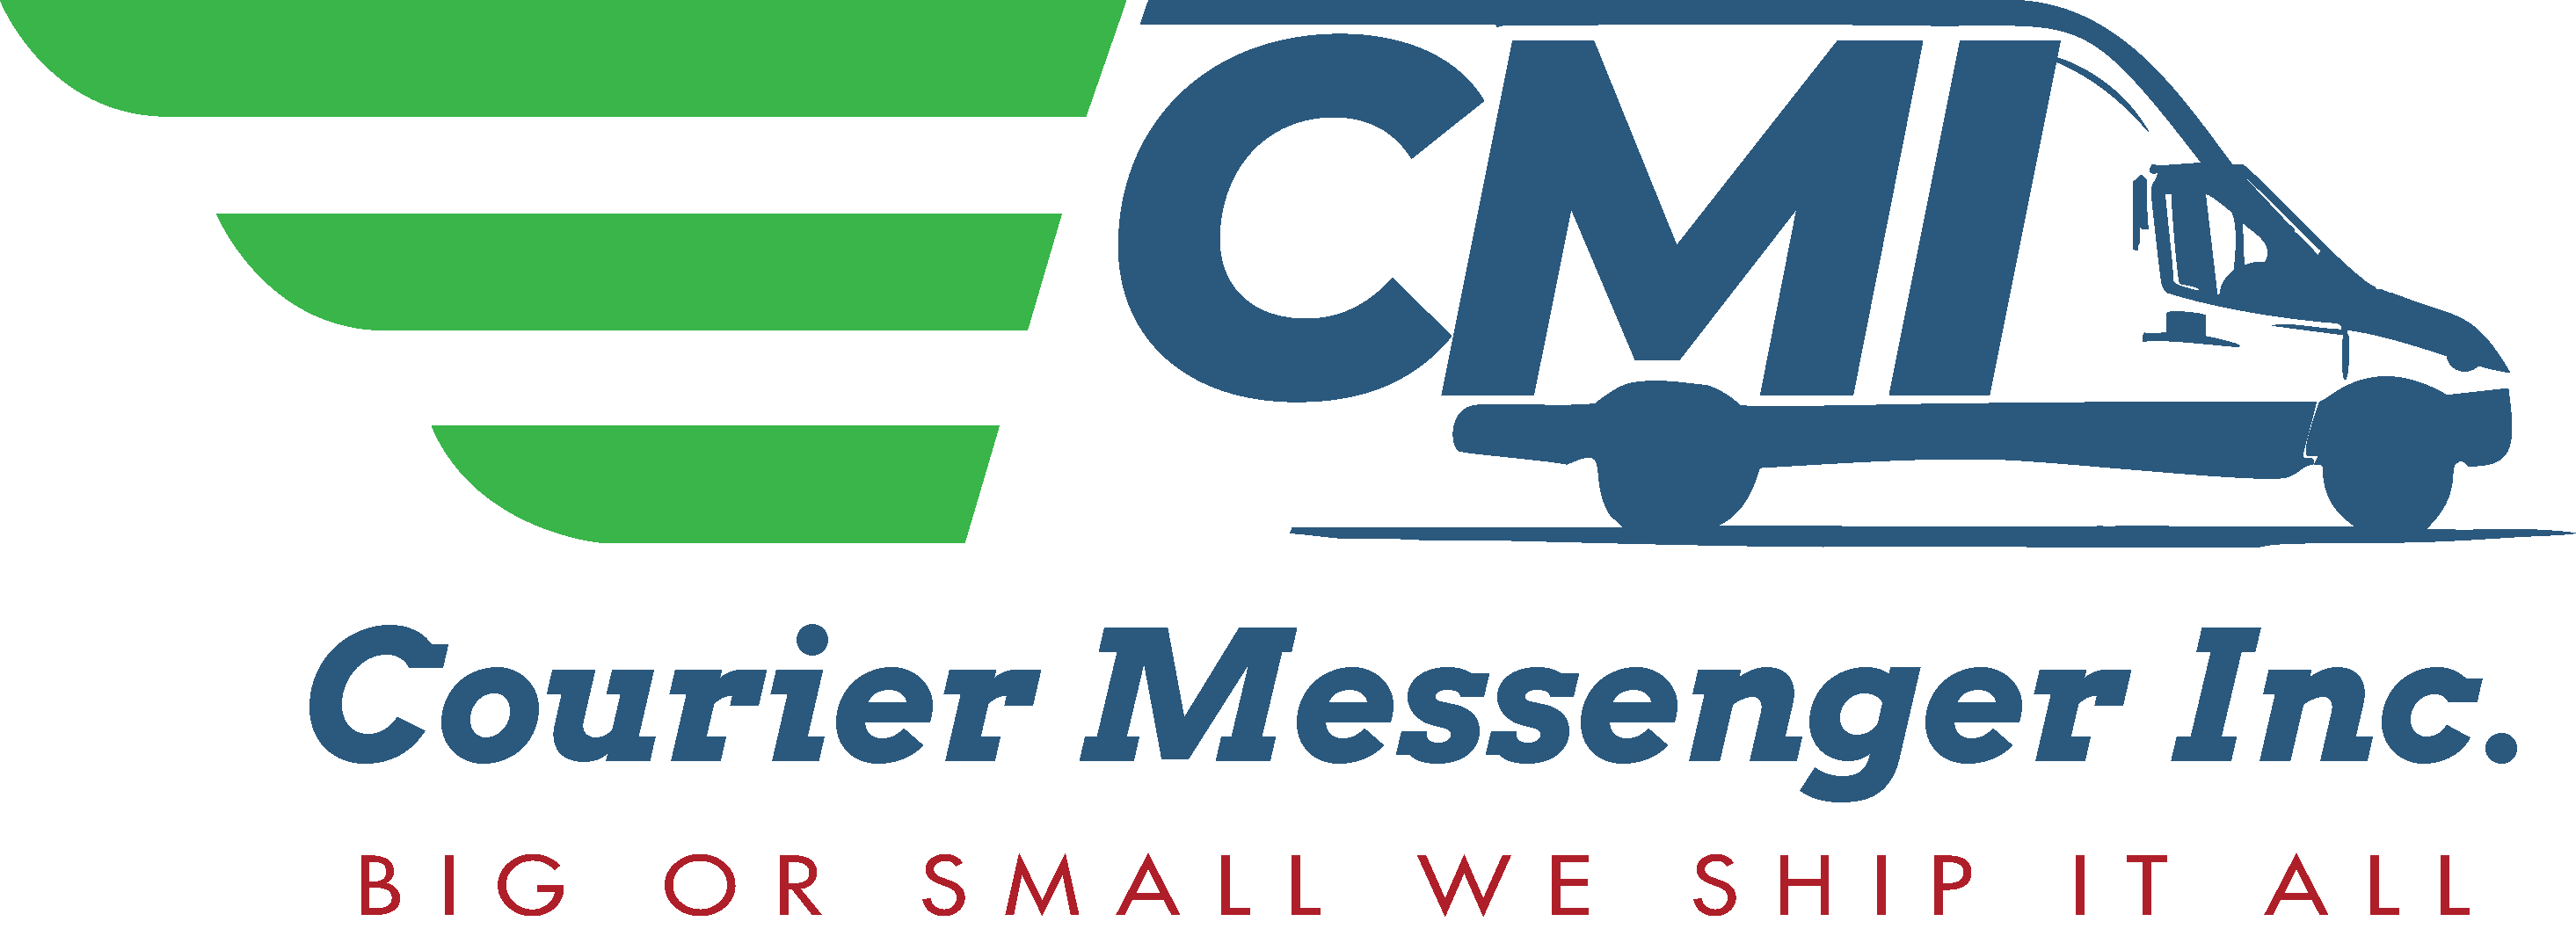 Courier-Messenger, Inc.